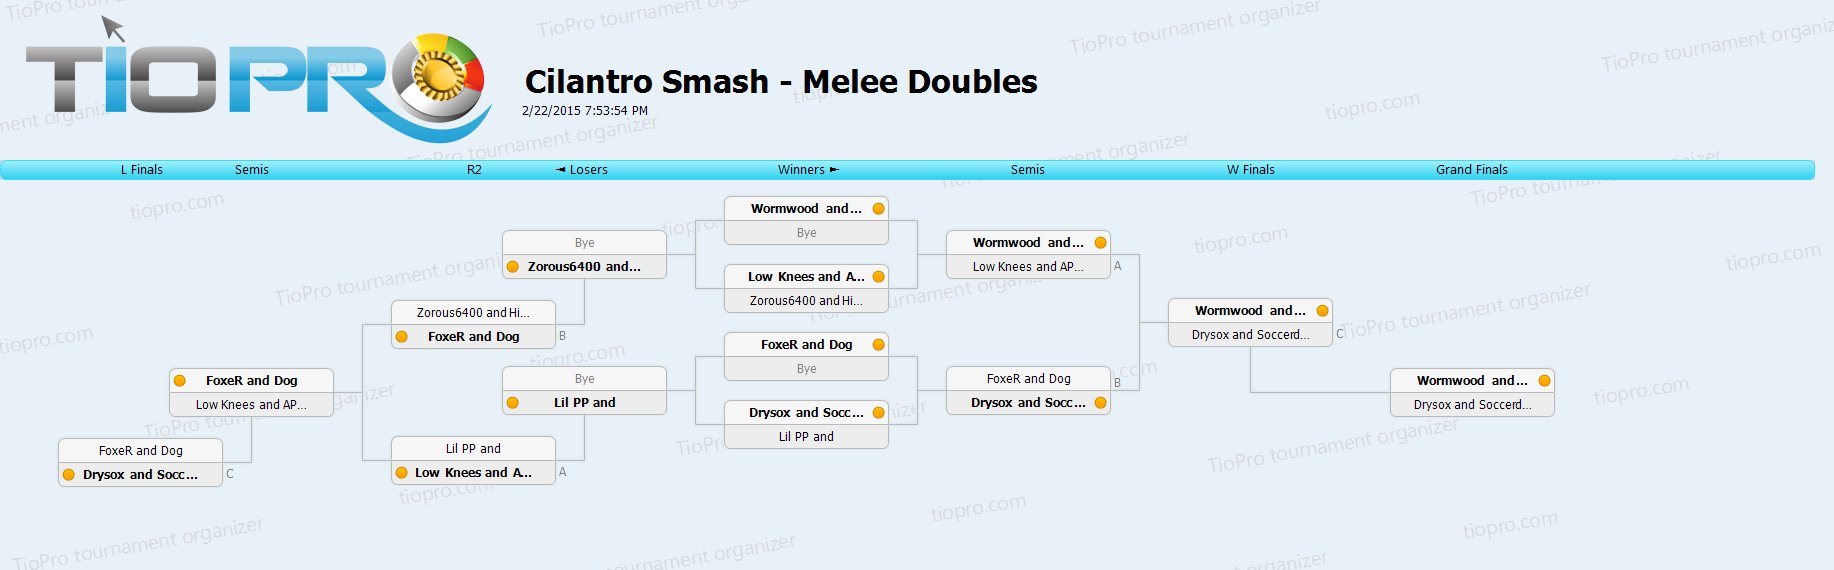 Cilantro Smash Melee Doubles